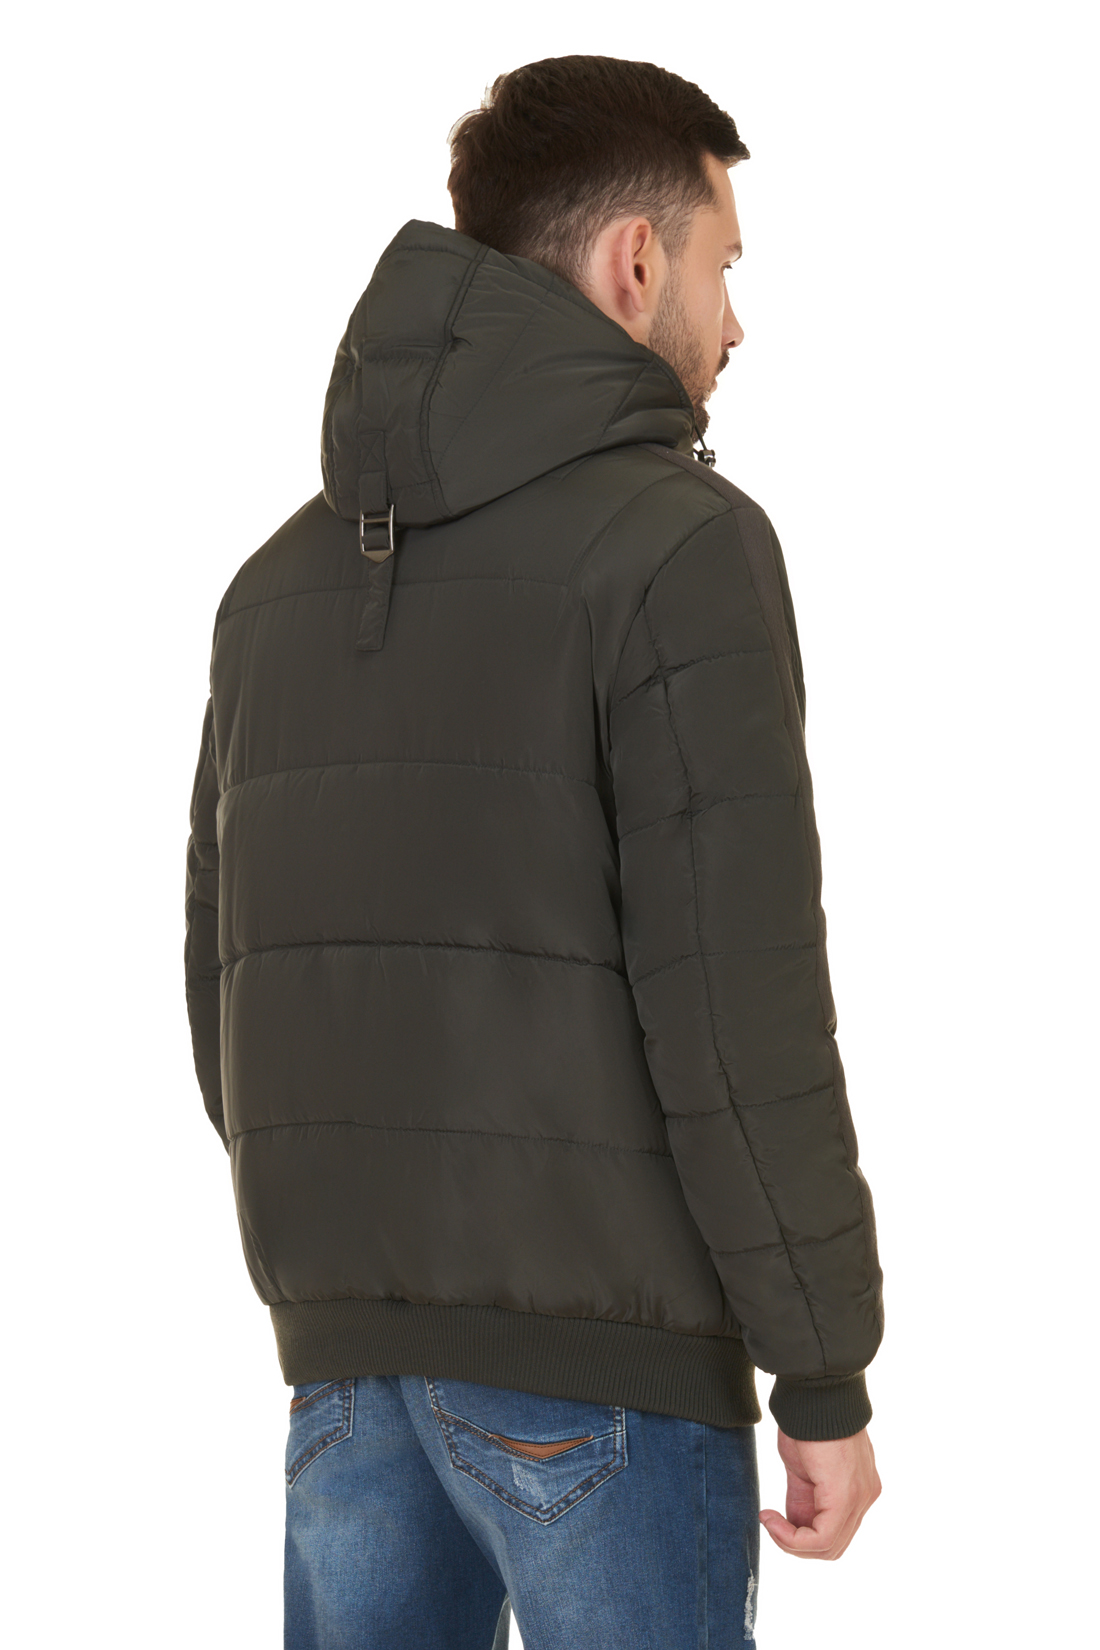 Куртка защитного цвета (арт. baon B537539), размер M Куртка защитного цвета (арт. baon B537539) - фото 2